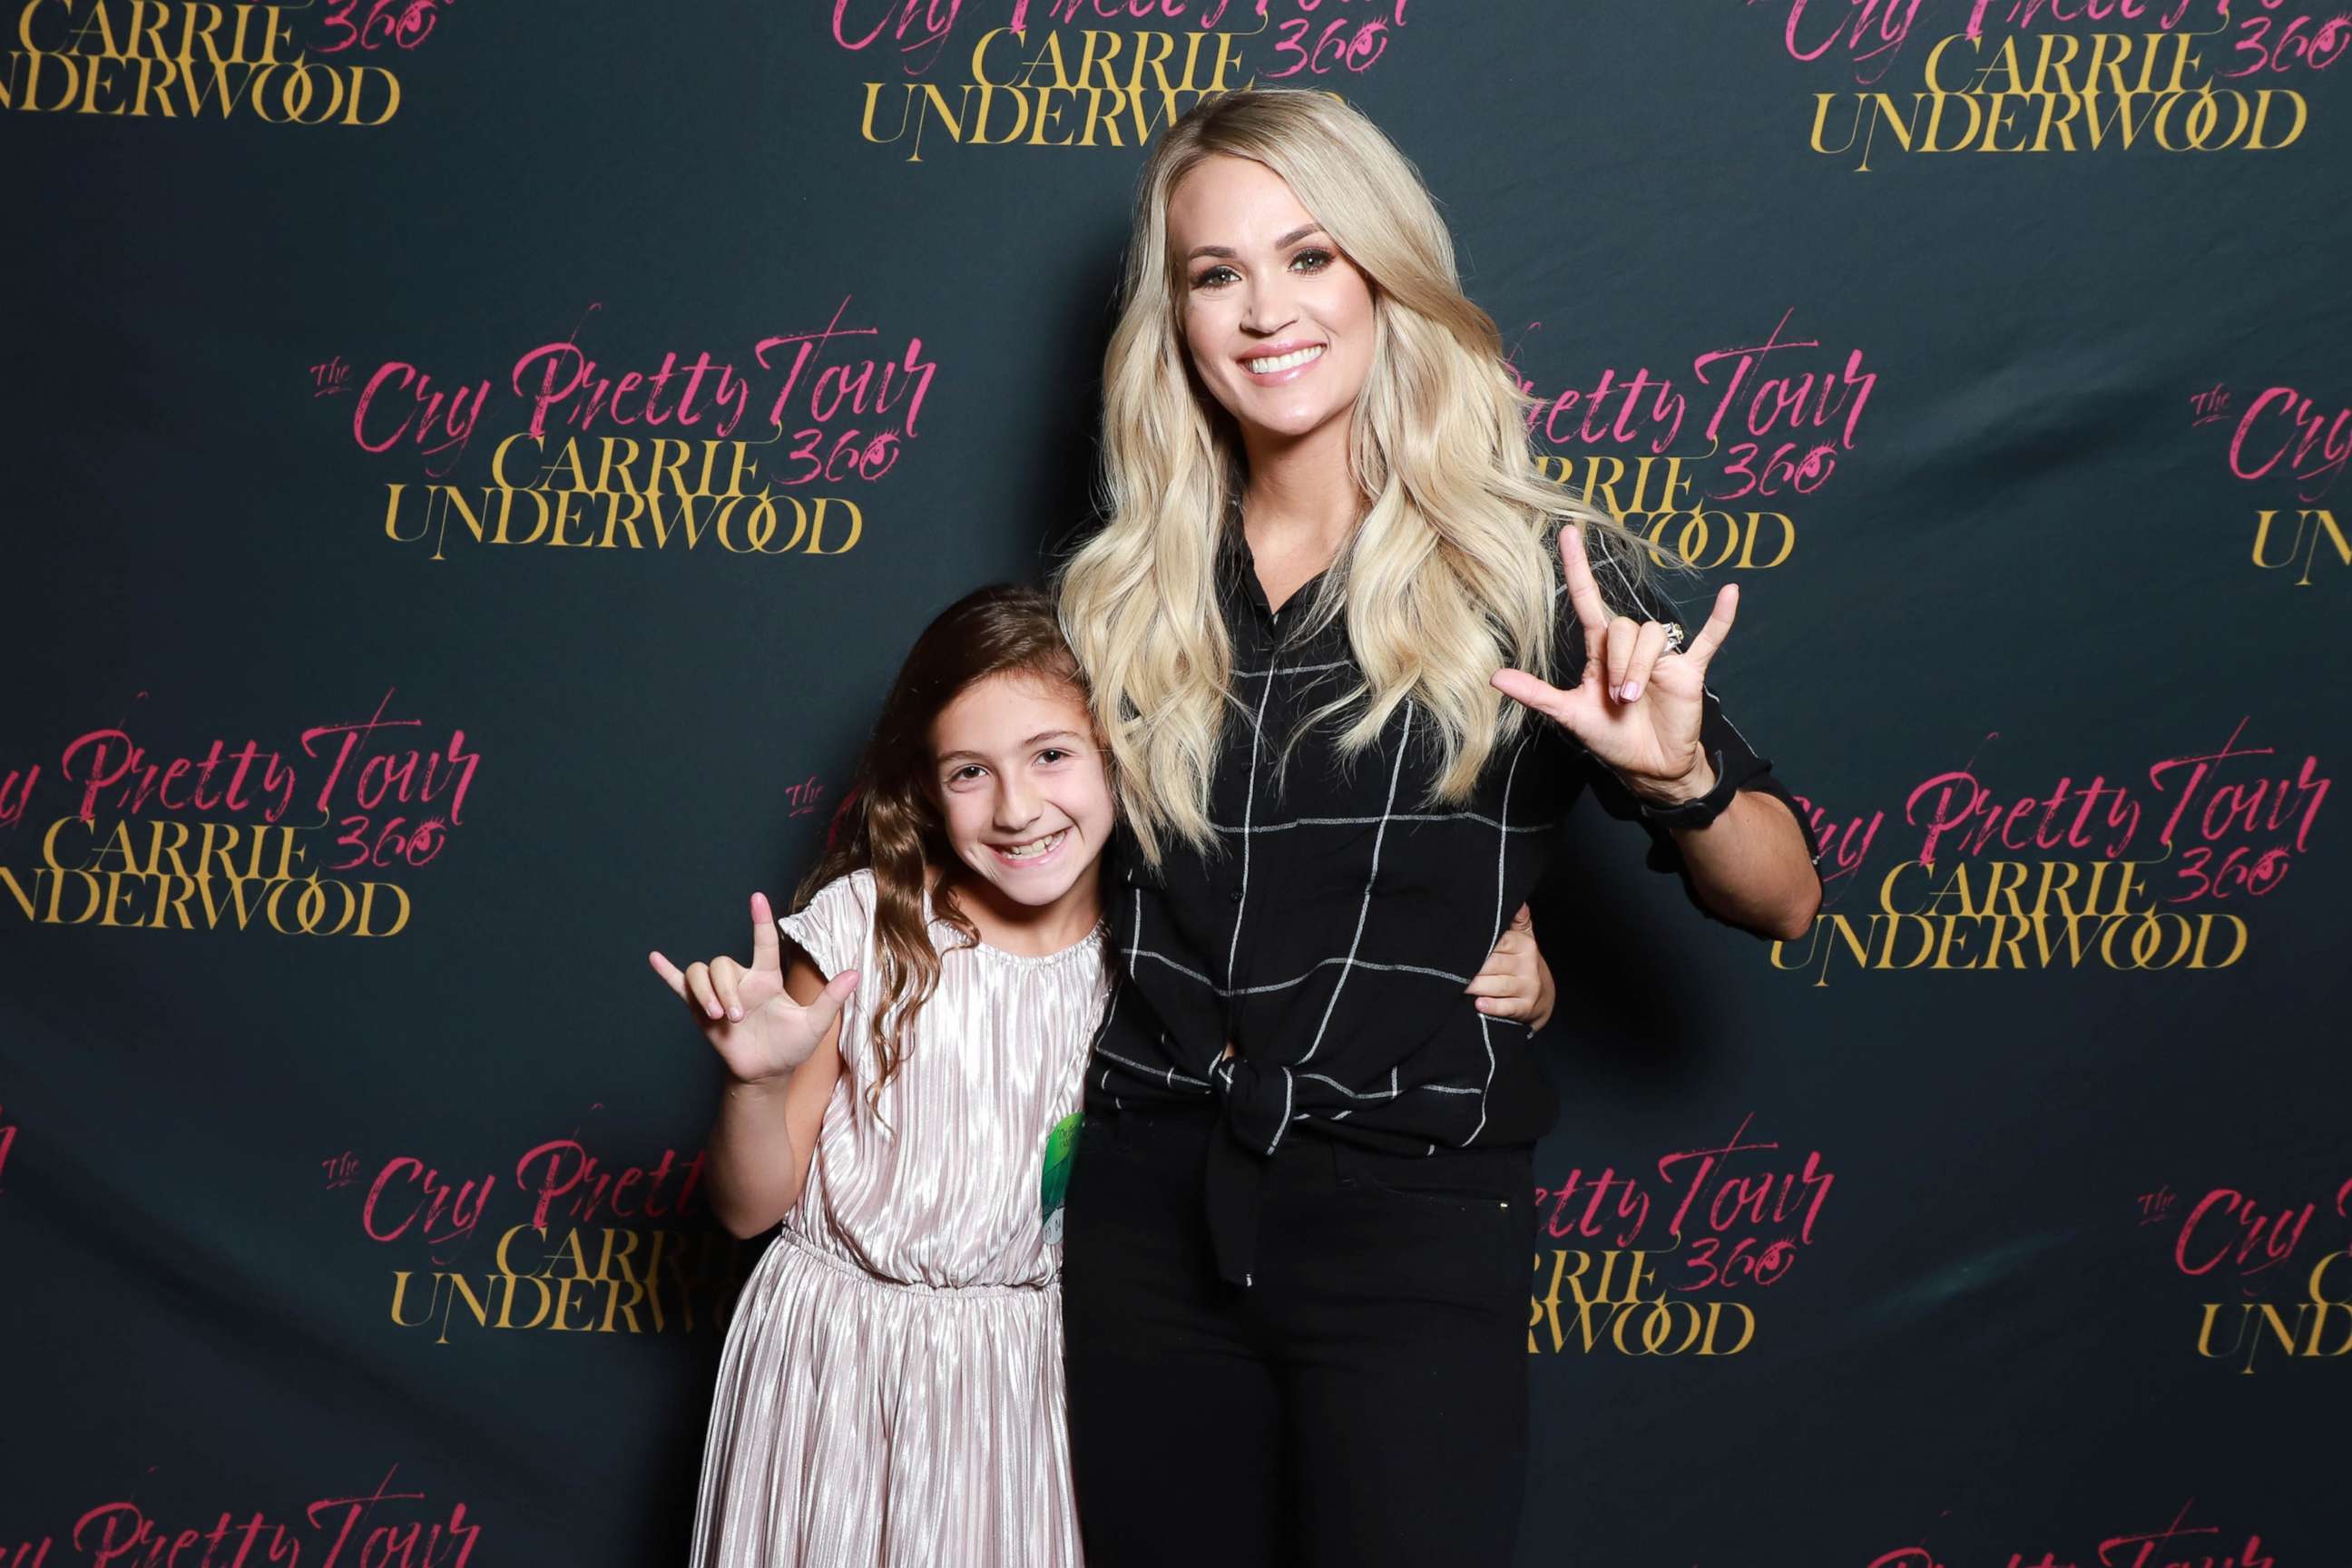 PHOTO: Savannah Dahan got to meet Carrie Underwood at the singer's concert in Washington, D.C.